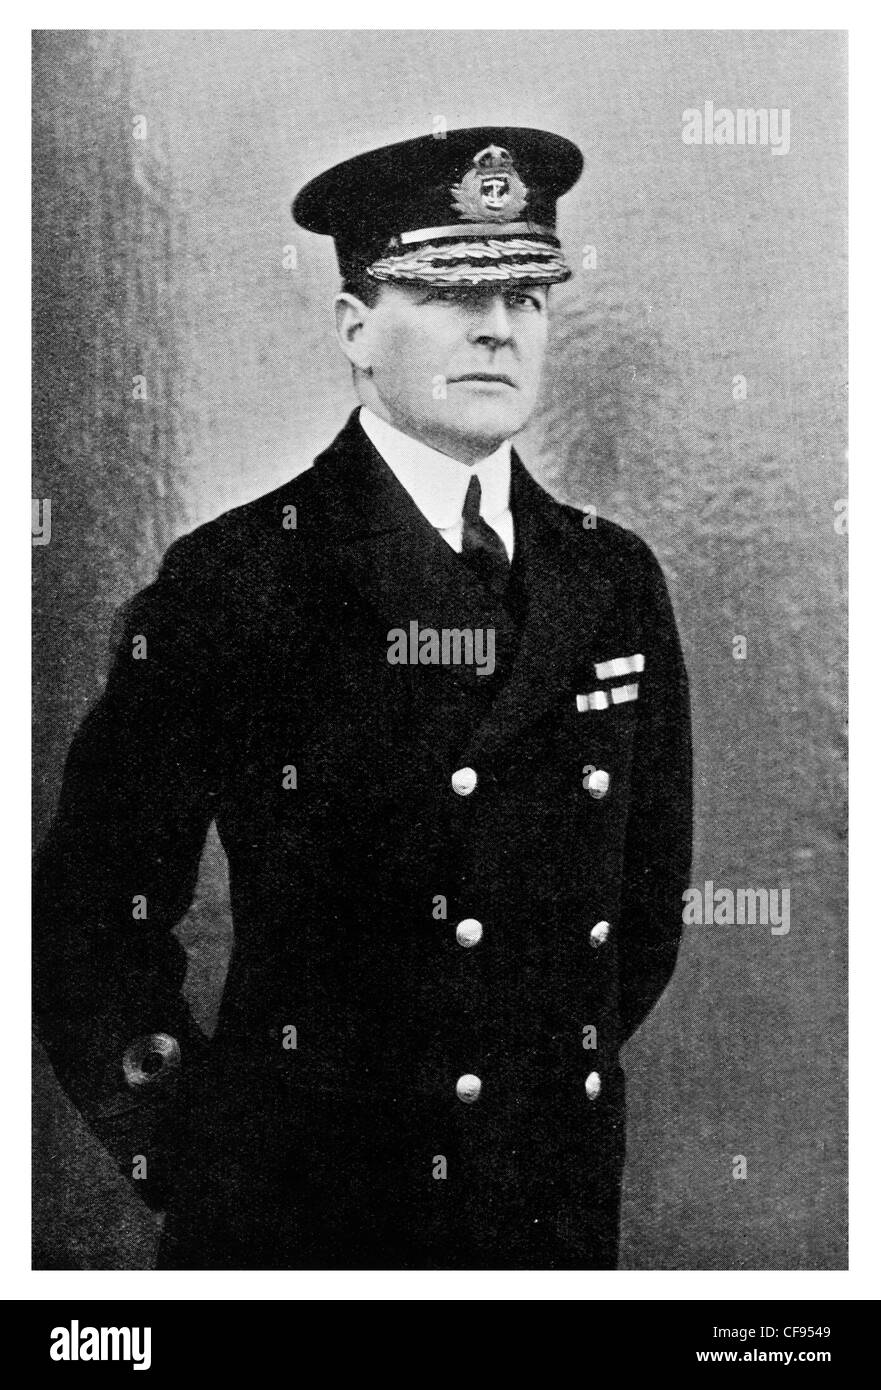 Admiral der Flotte David Richard Beatty, 1. Earl Beatty PC, GCB, OM, GCVO, DSO Royal Navy-Offizier Stockfoto